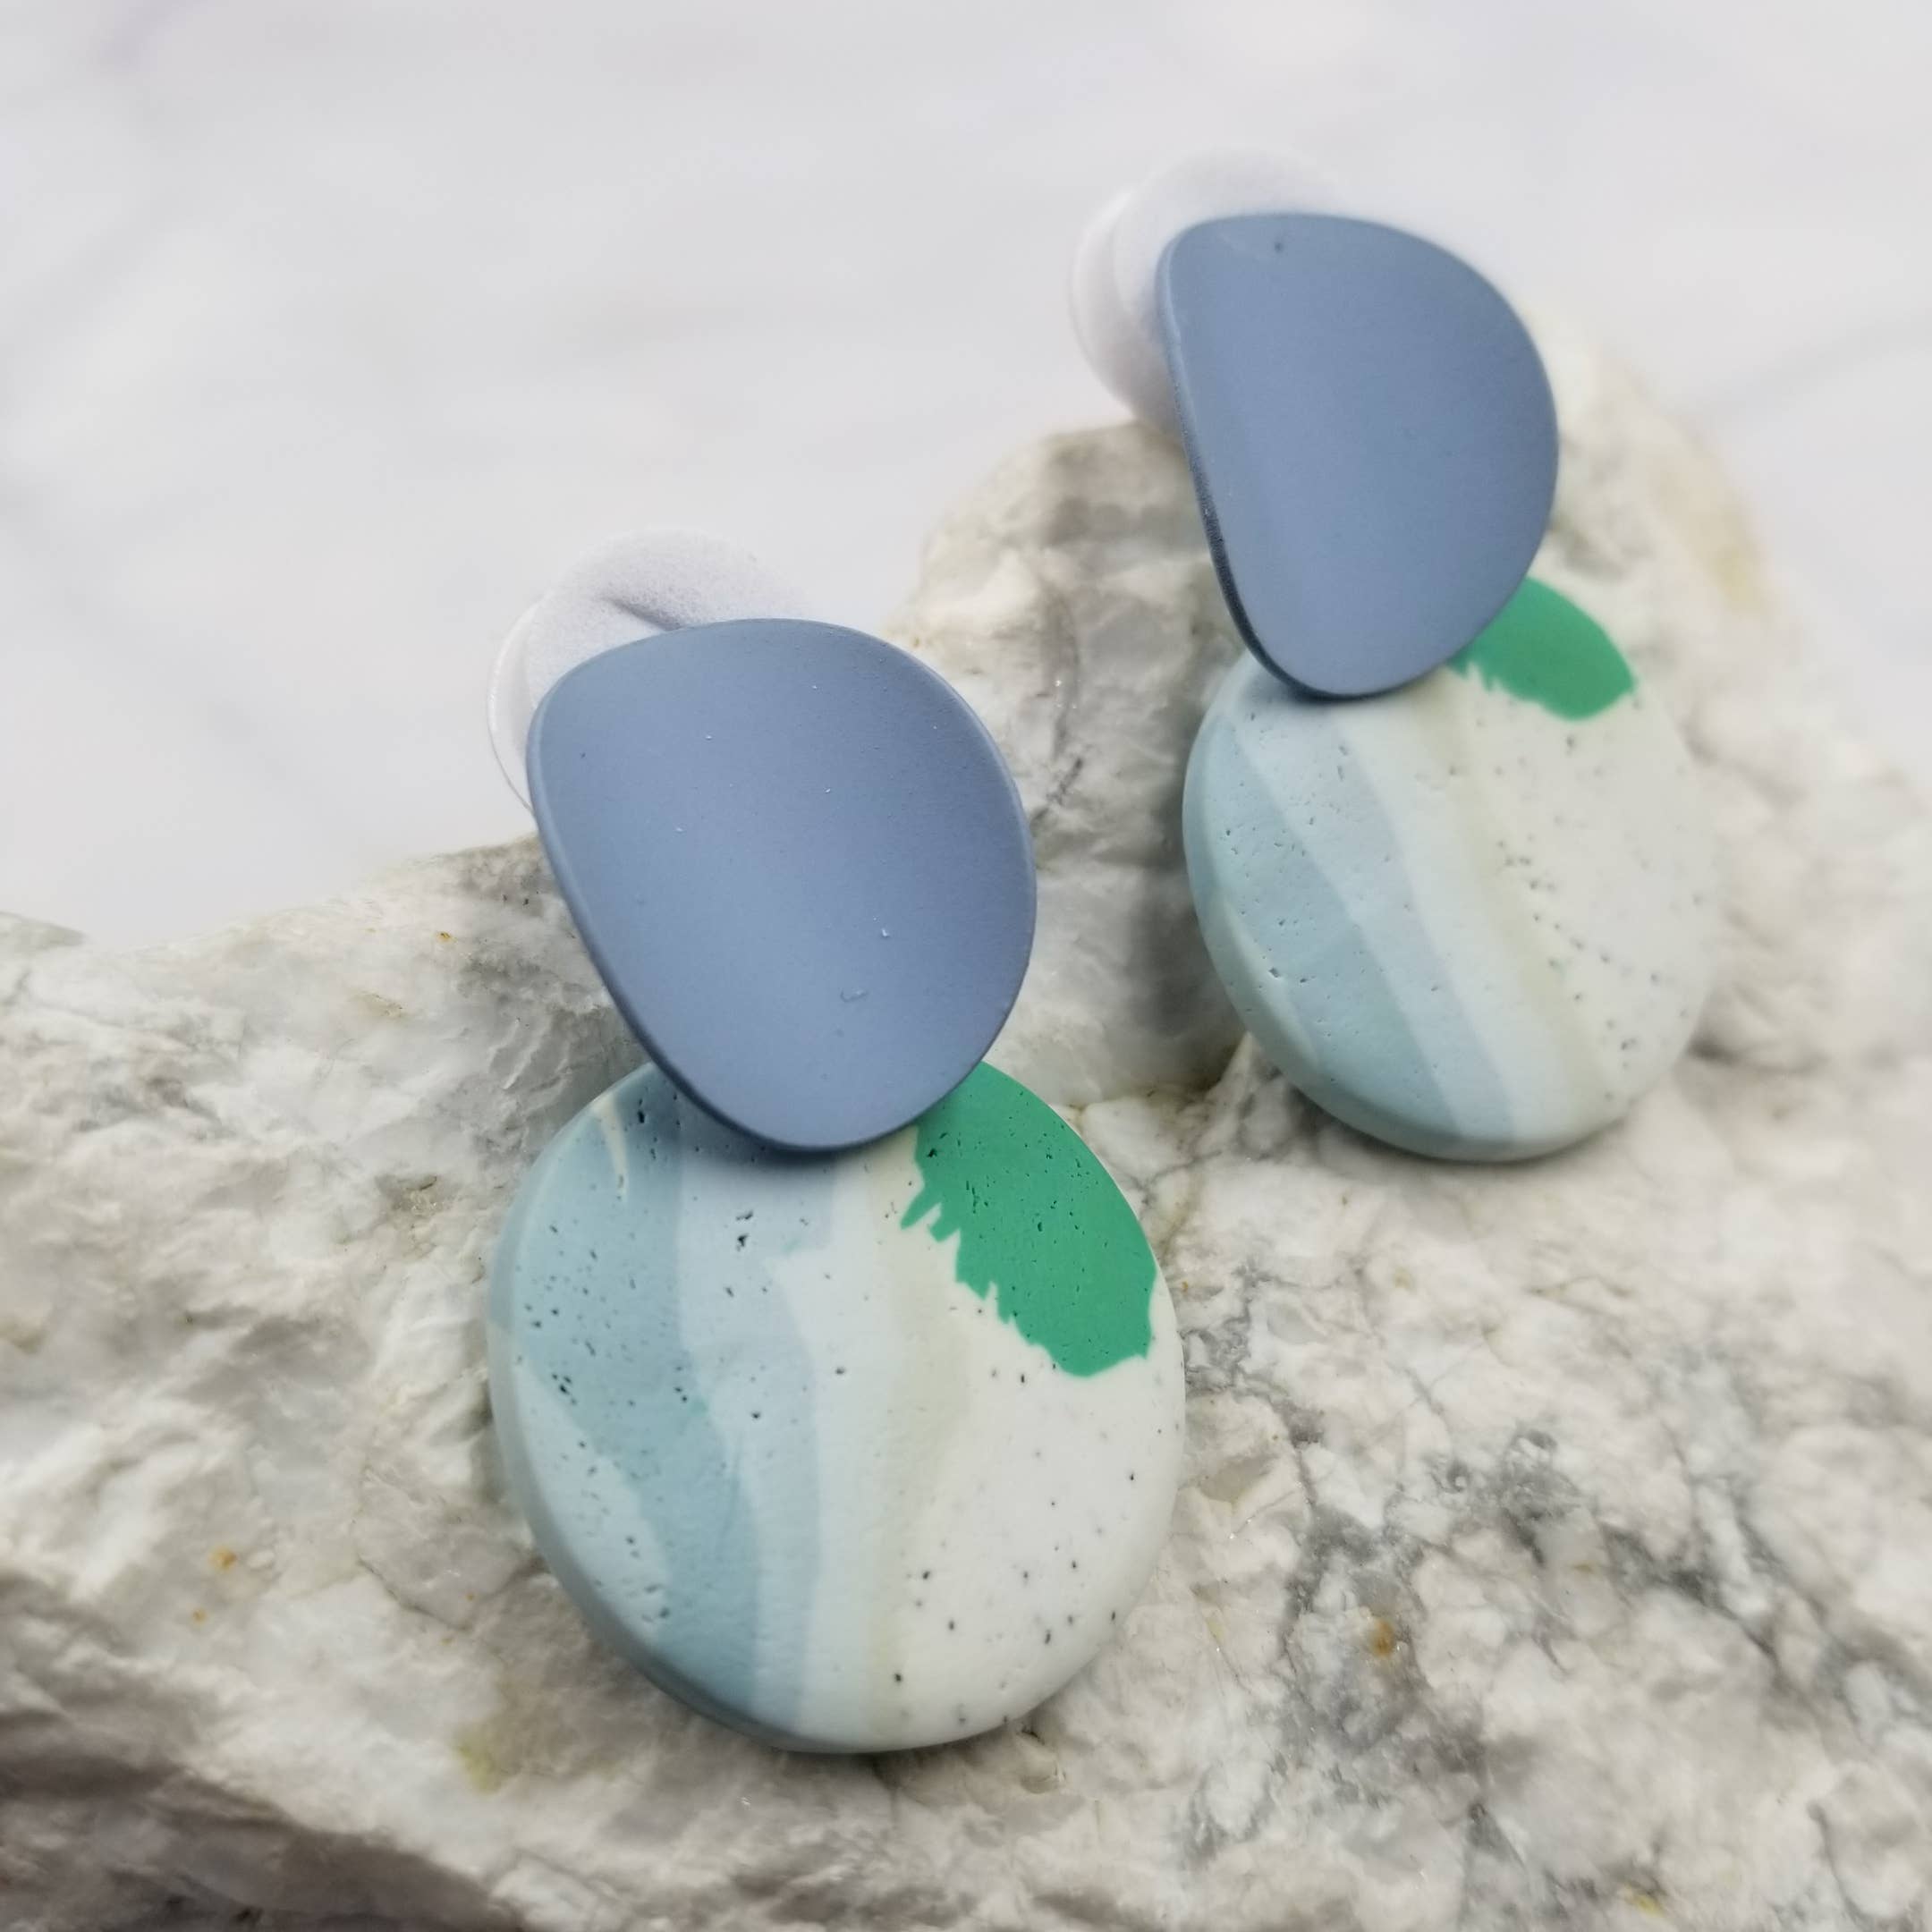 Blue Marble Earrings